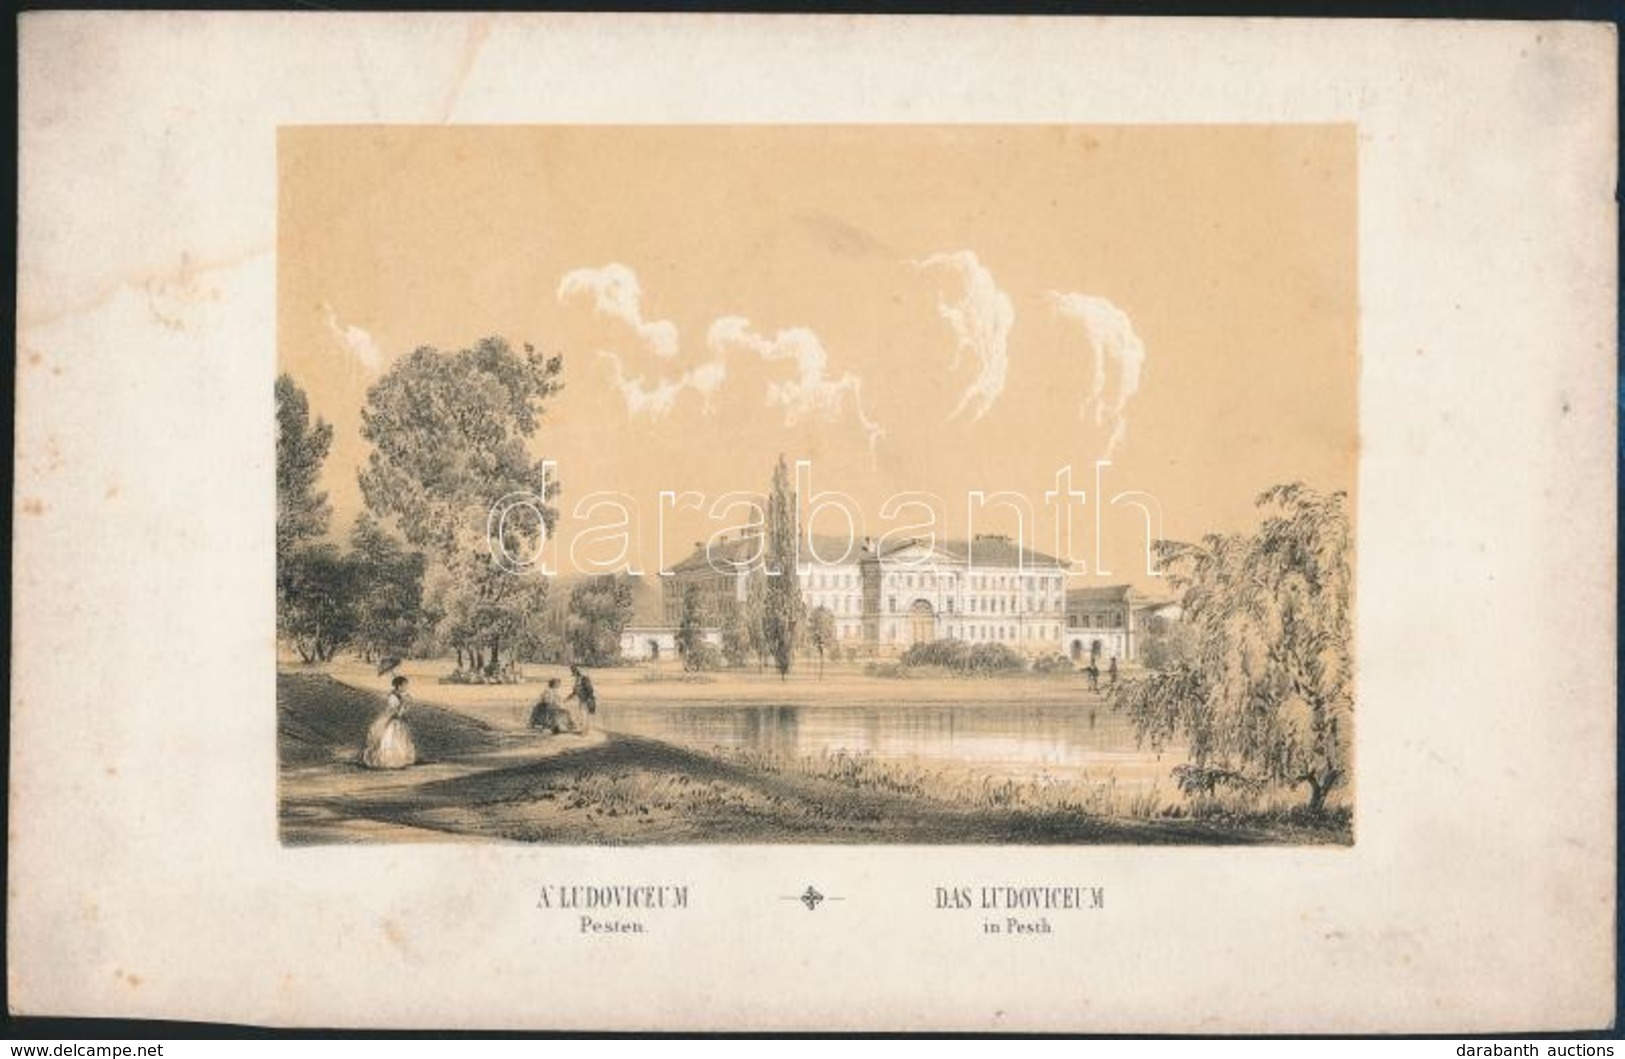 Cca 1850 A Ludoviceum Pesten  Litográfia Szerelmey M: Műhelyéből. Cca 1850 18x14 Cm - Prints & Engravings